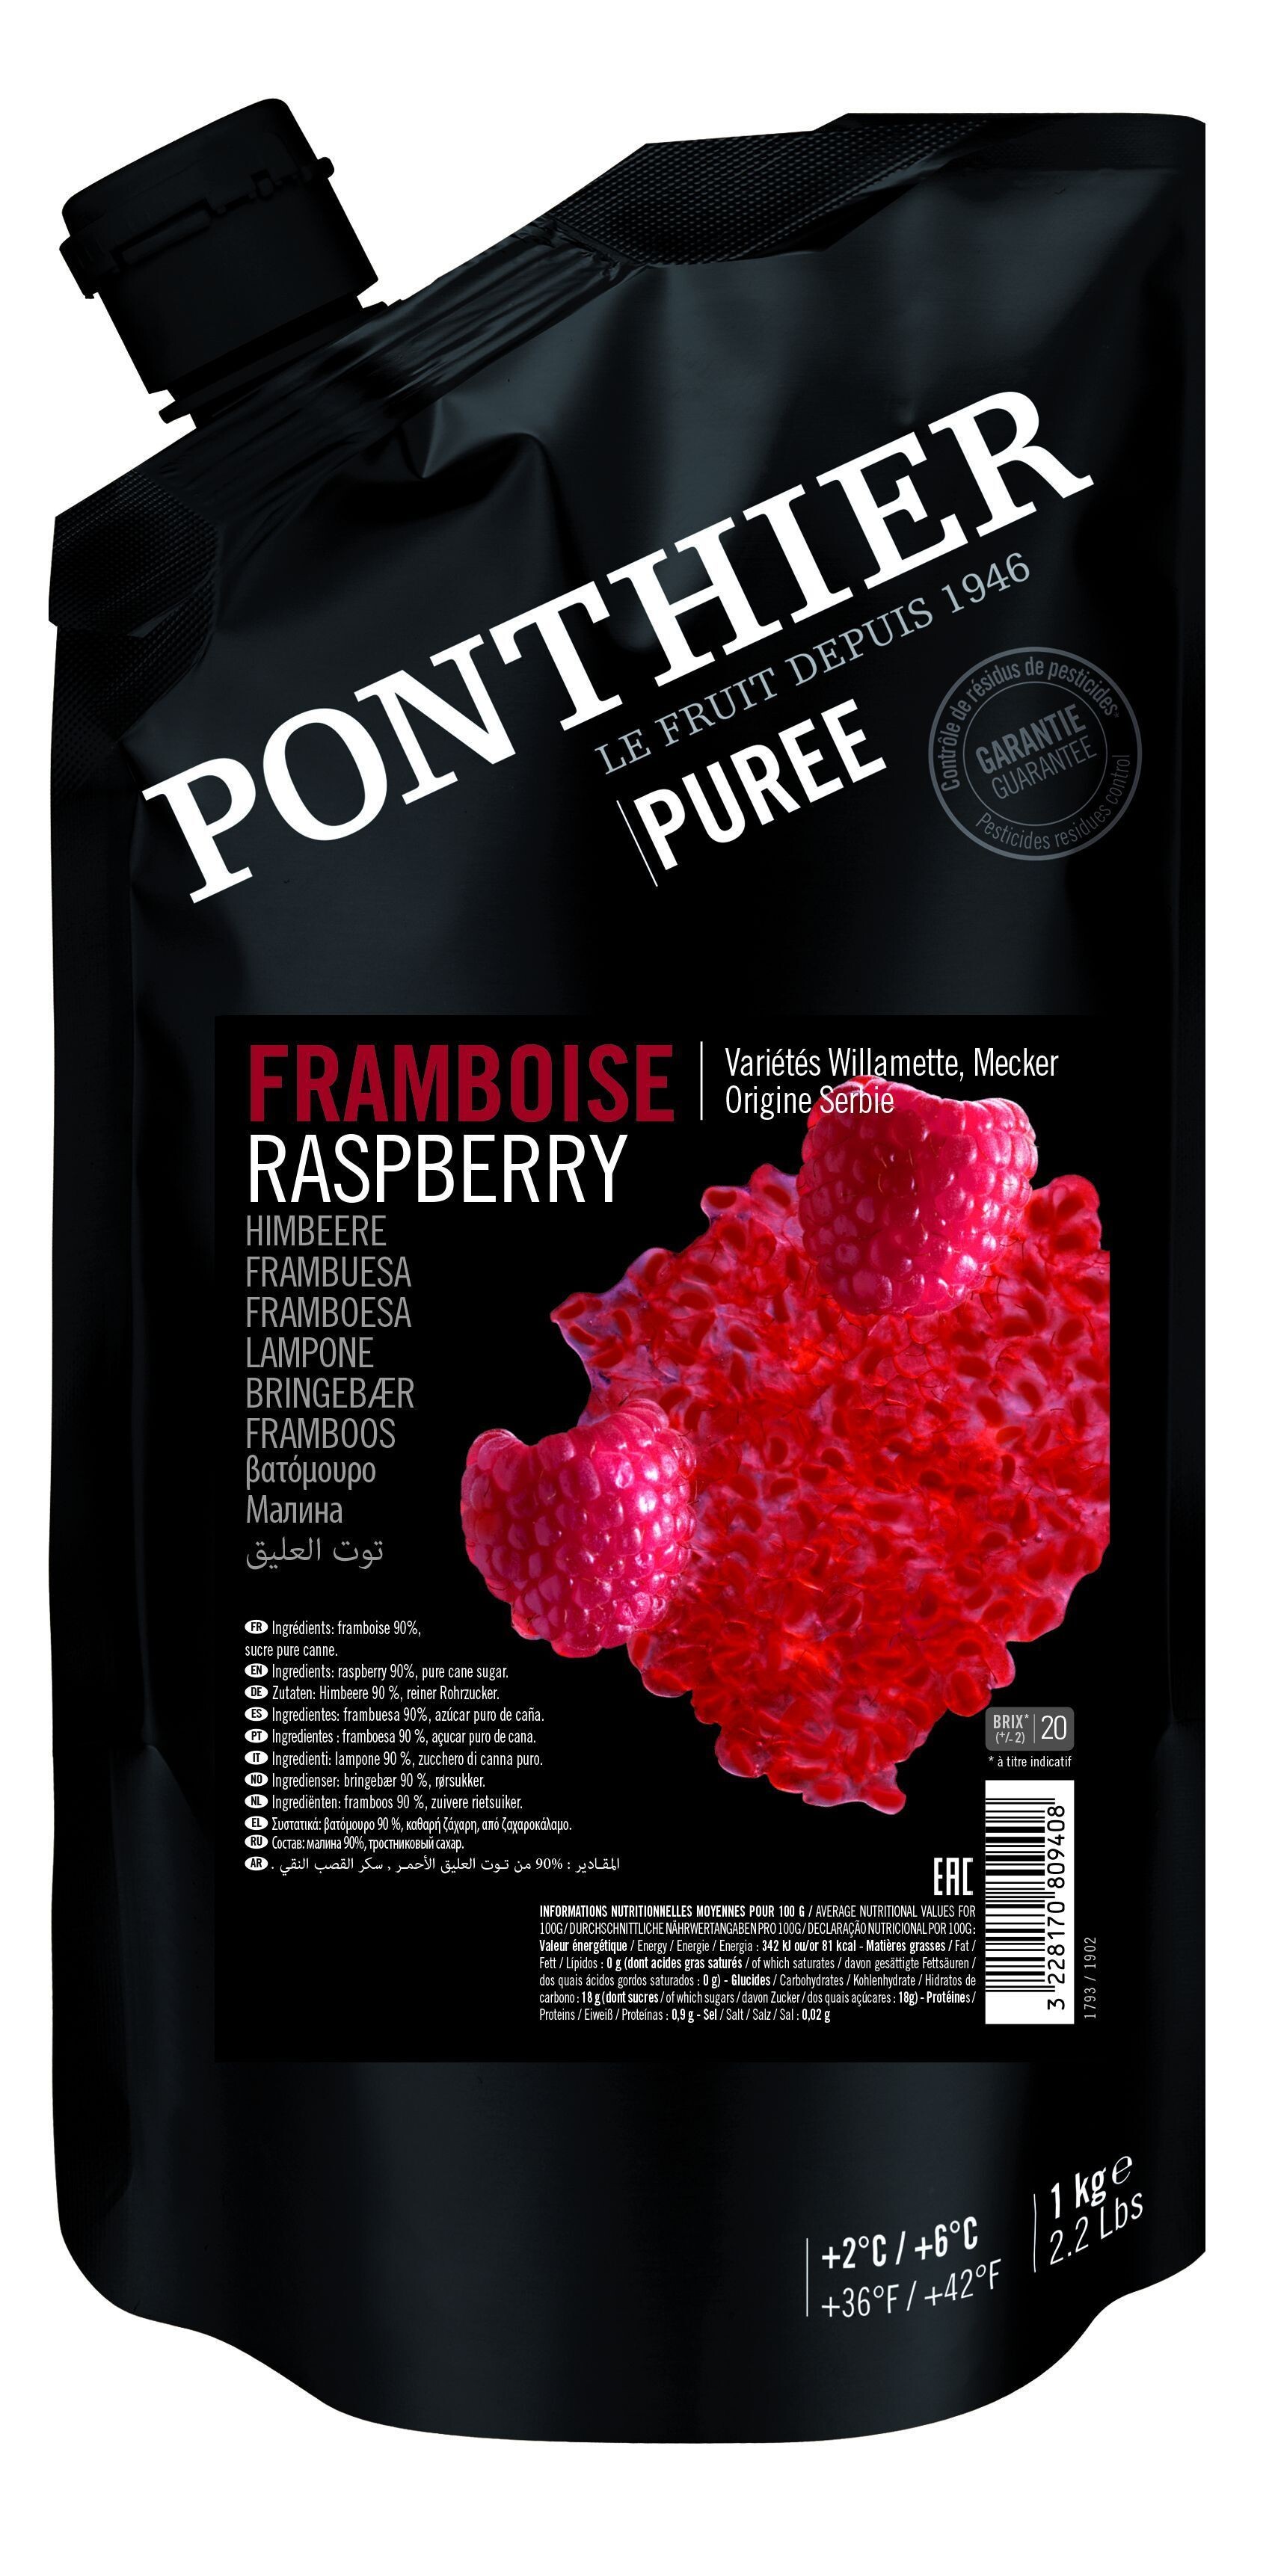 Ponthier Fruit Puree Raspberry 1kg